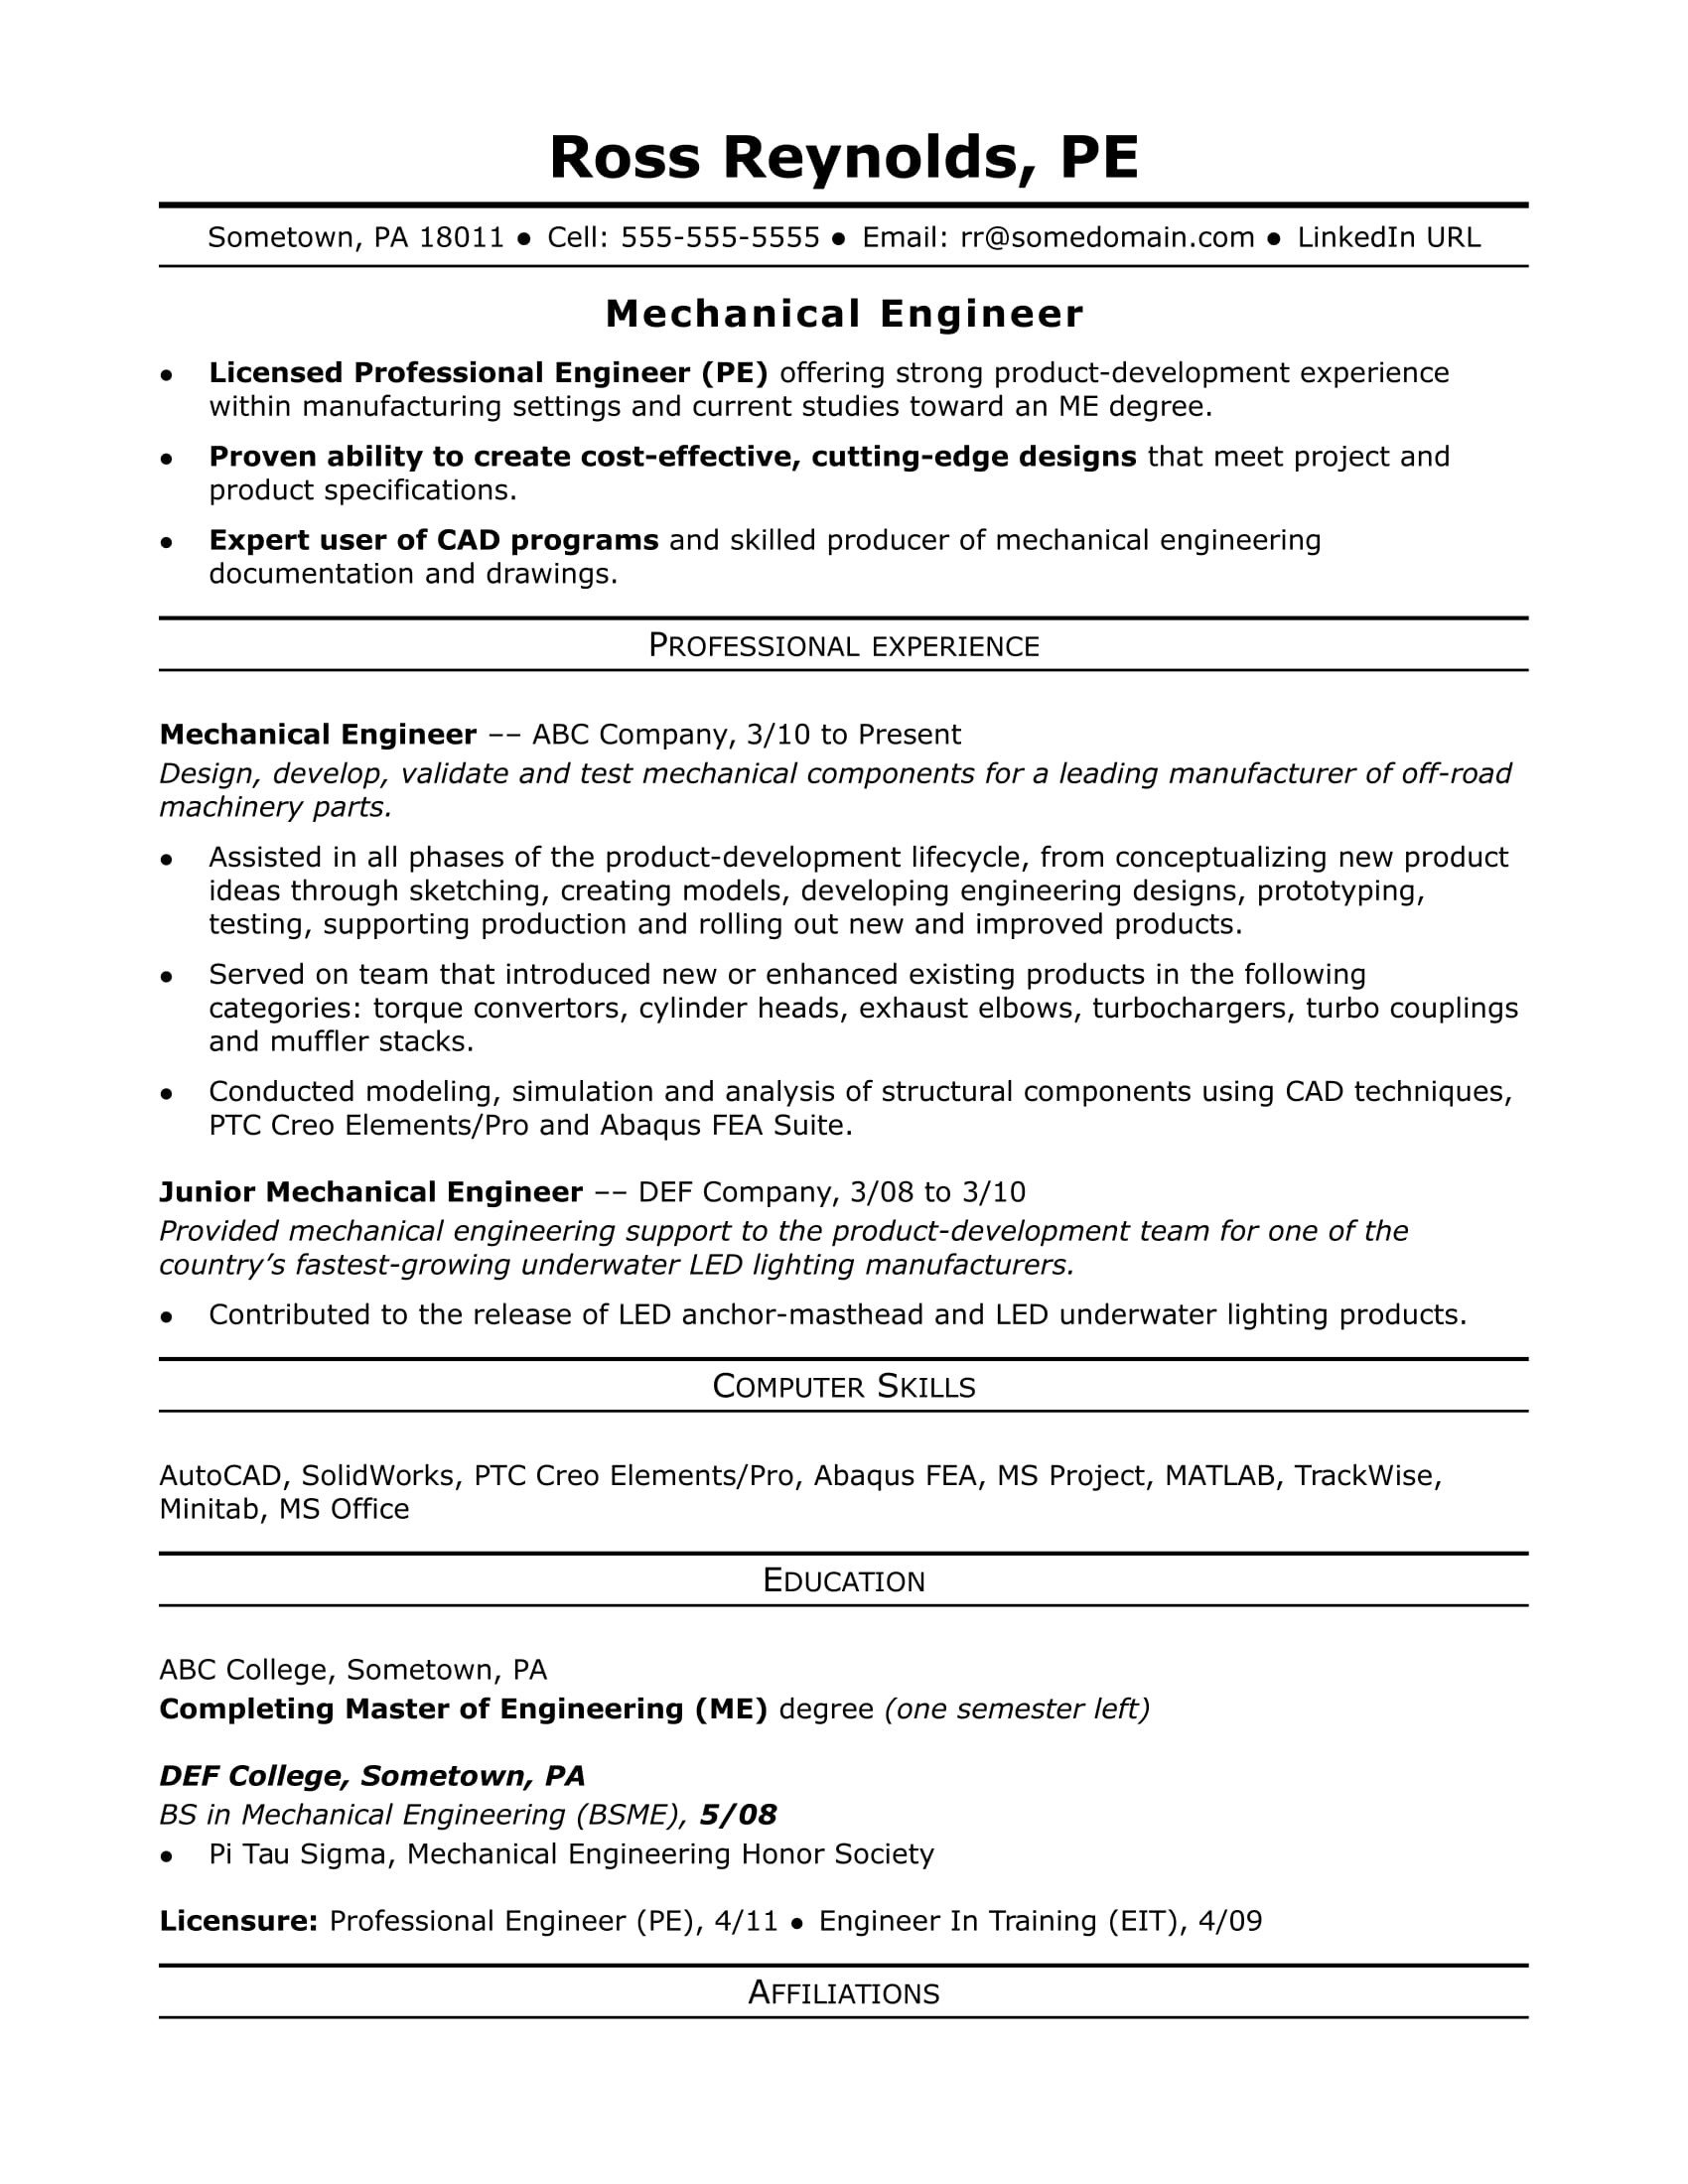 Sample Resume for a Midlevel Mechanical Engineer